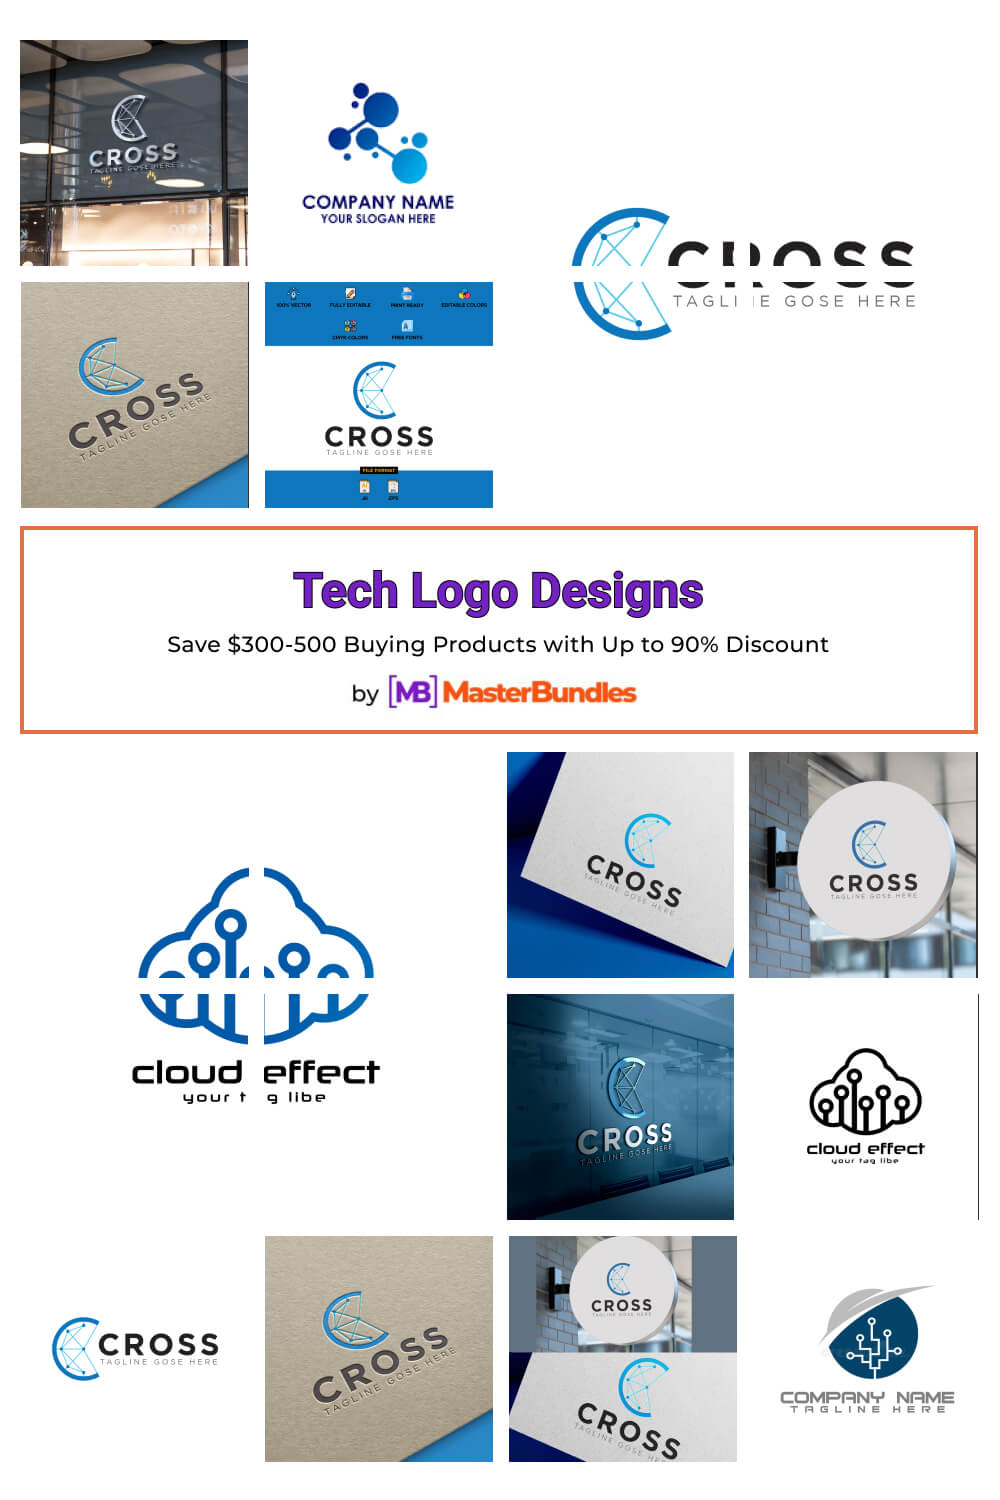 tech logo designs pinterest image.